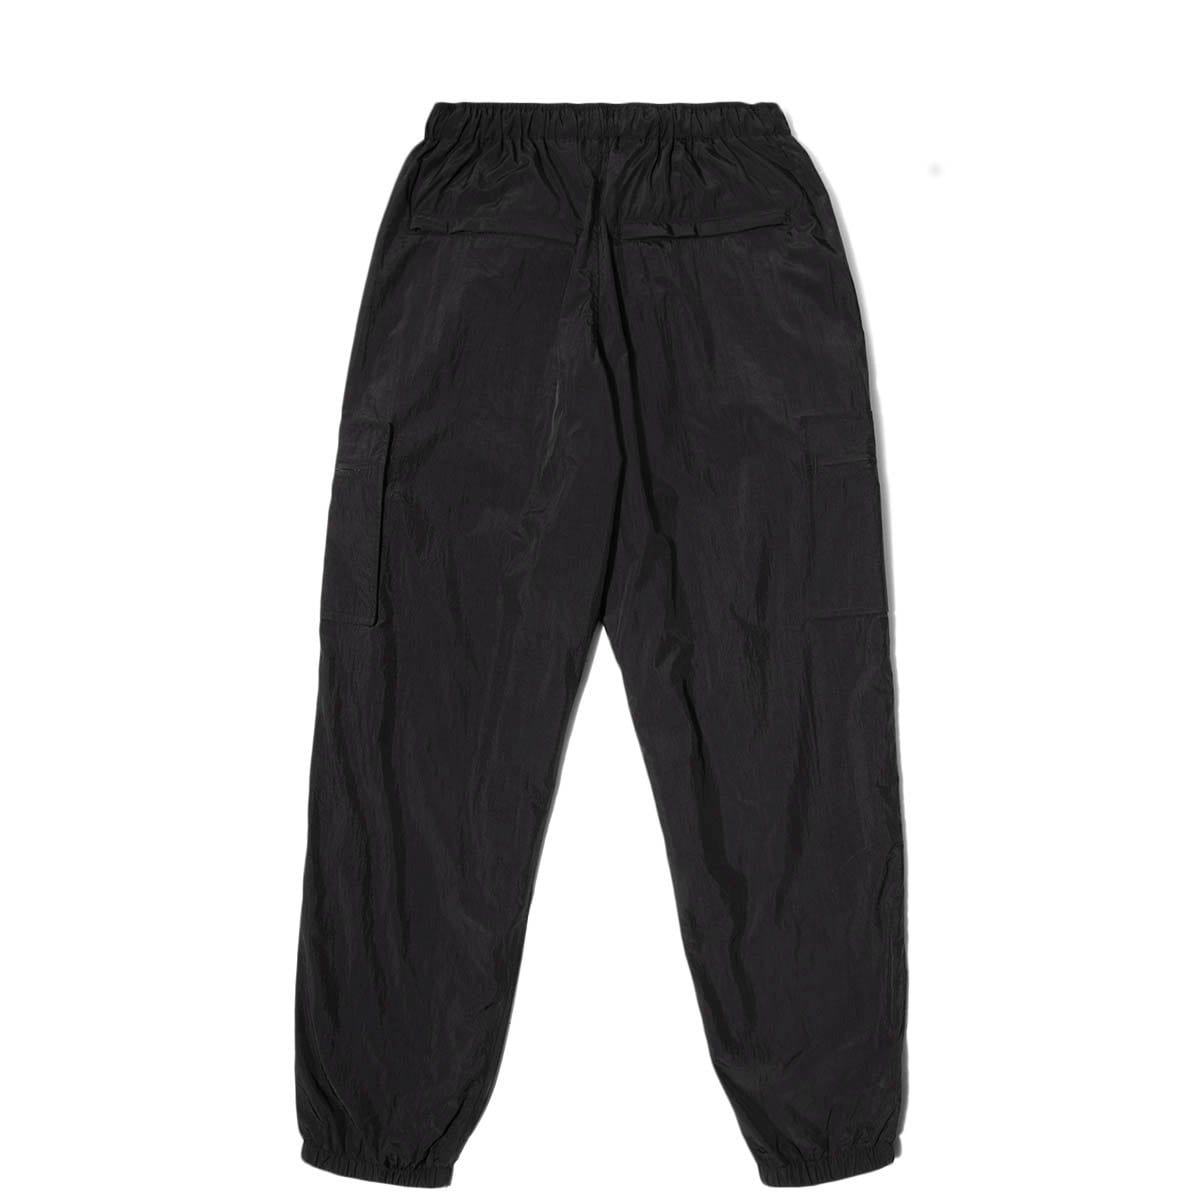 Nike Sportswear Windrunner Men's Track Pants, Black, Medium : Amazon.in:  Clothing & Accessories